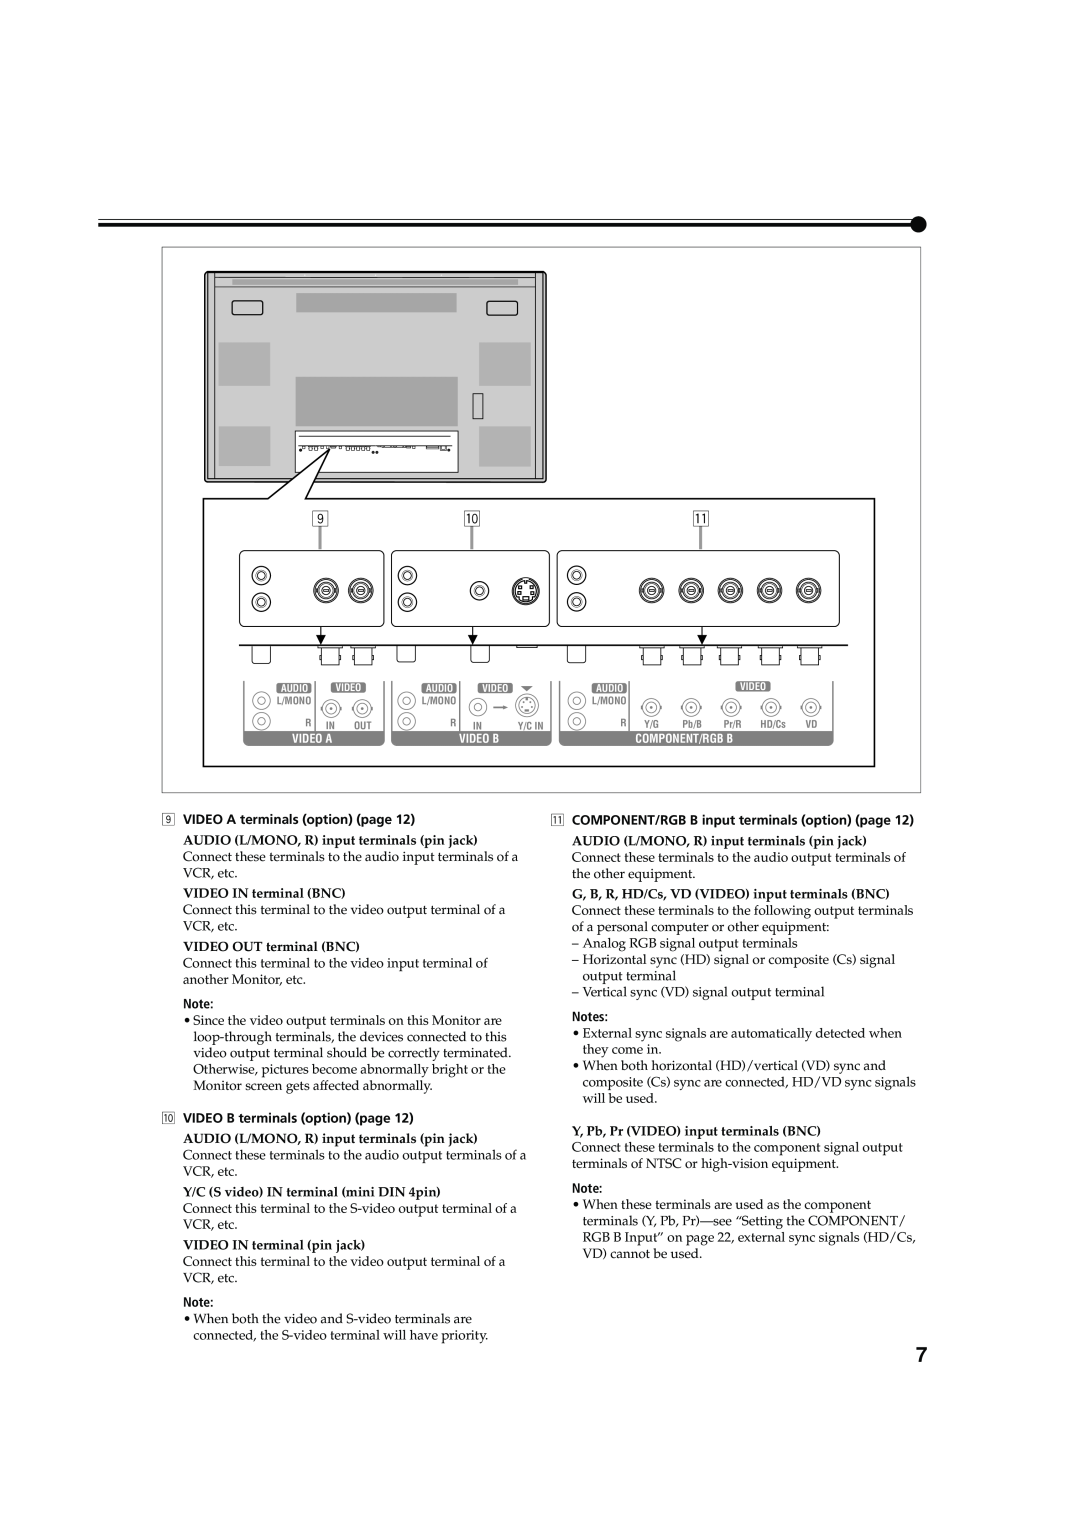 JVC 0204MKH-MW-VP, LCT1616-001A, GM-V42C manual VIDEO A terminals option page, q COMPONENT/RGB B input terminals option page 